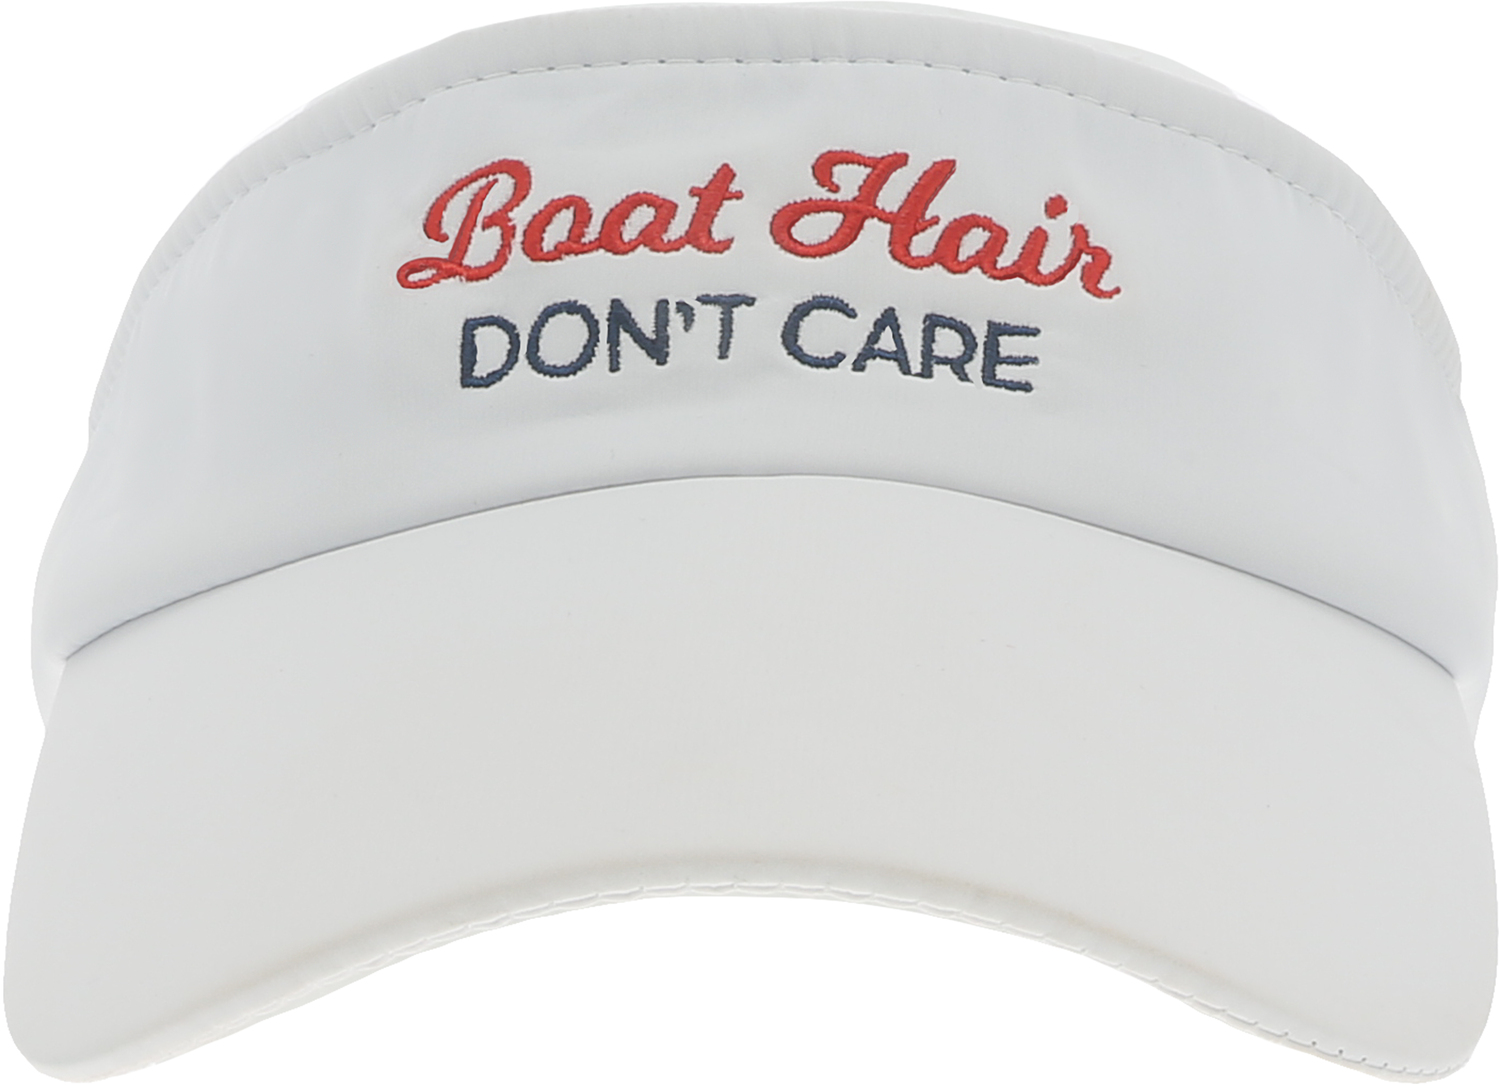 Boat Hair by We People - Boat Hair - White Dri-Fit Visor